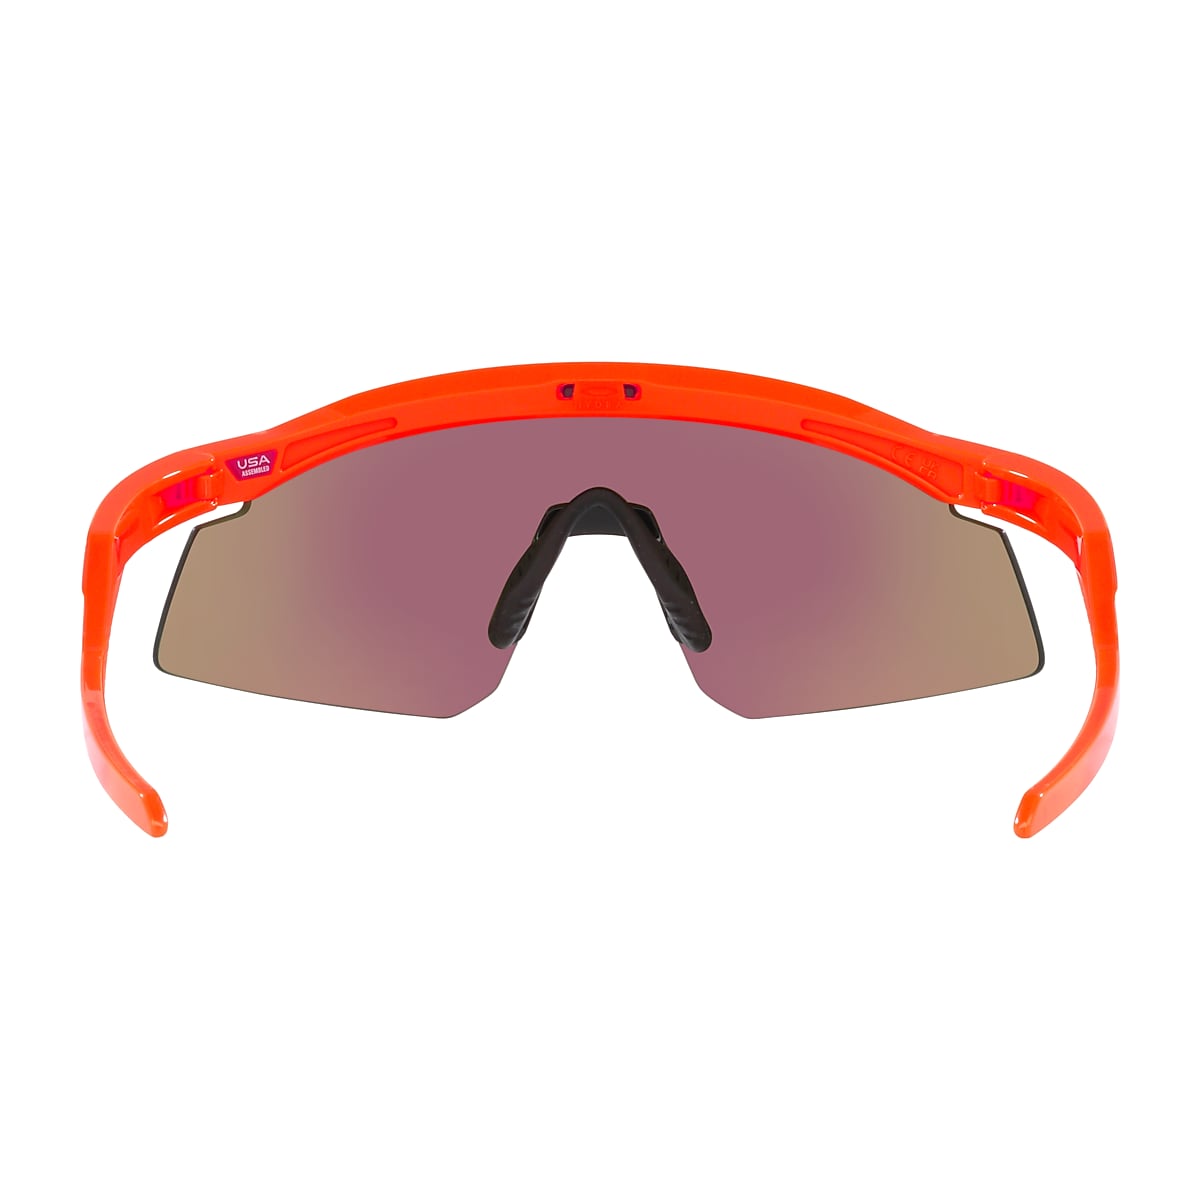 Top 80+ imagen orange oakley sunglasses